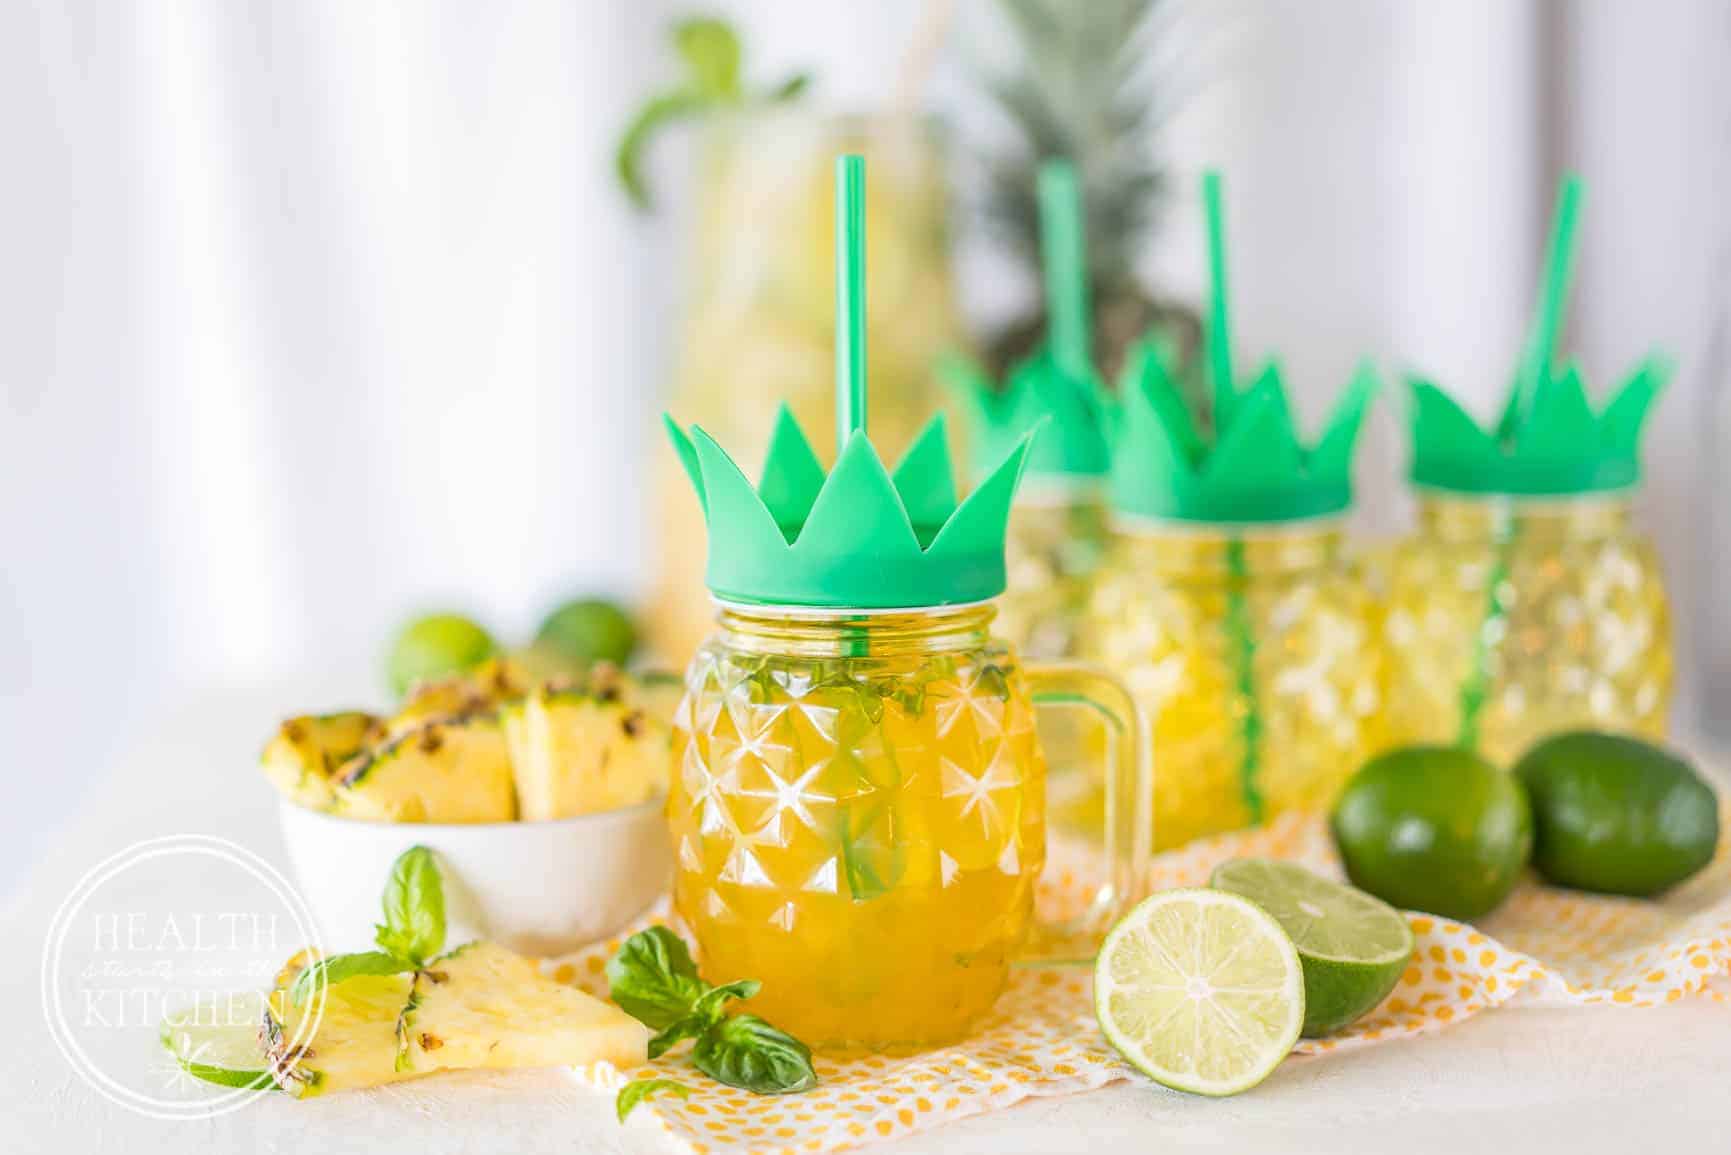 Pineapple Basil Limeade